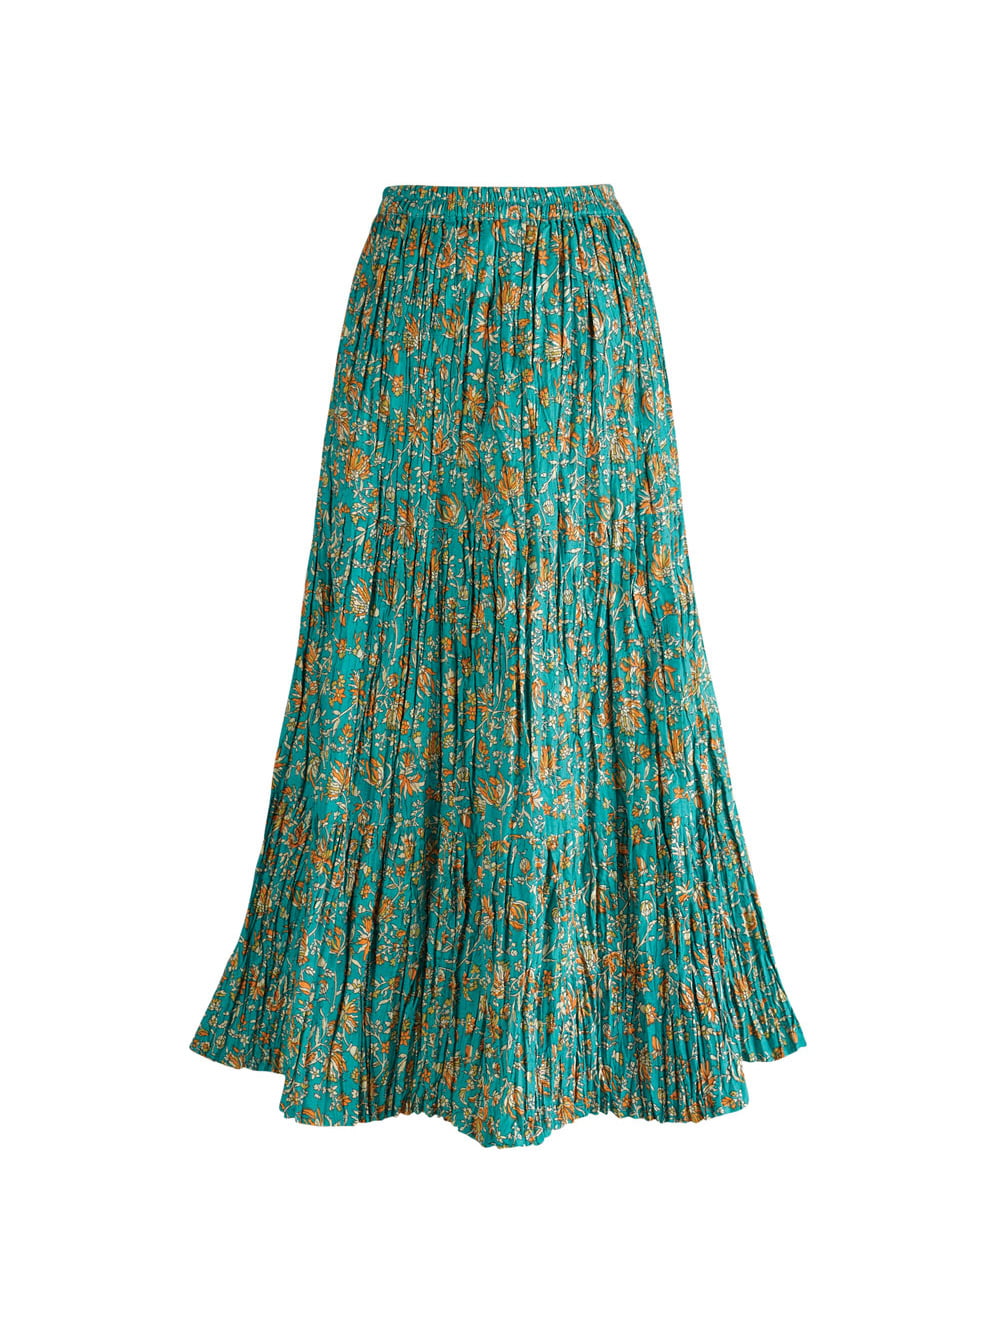 Catalog Classics - Women's Long Reversible Peasant Skirt - Boho Floral ...